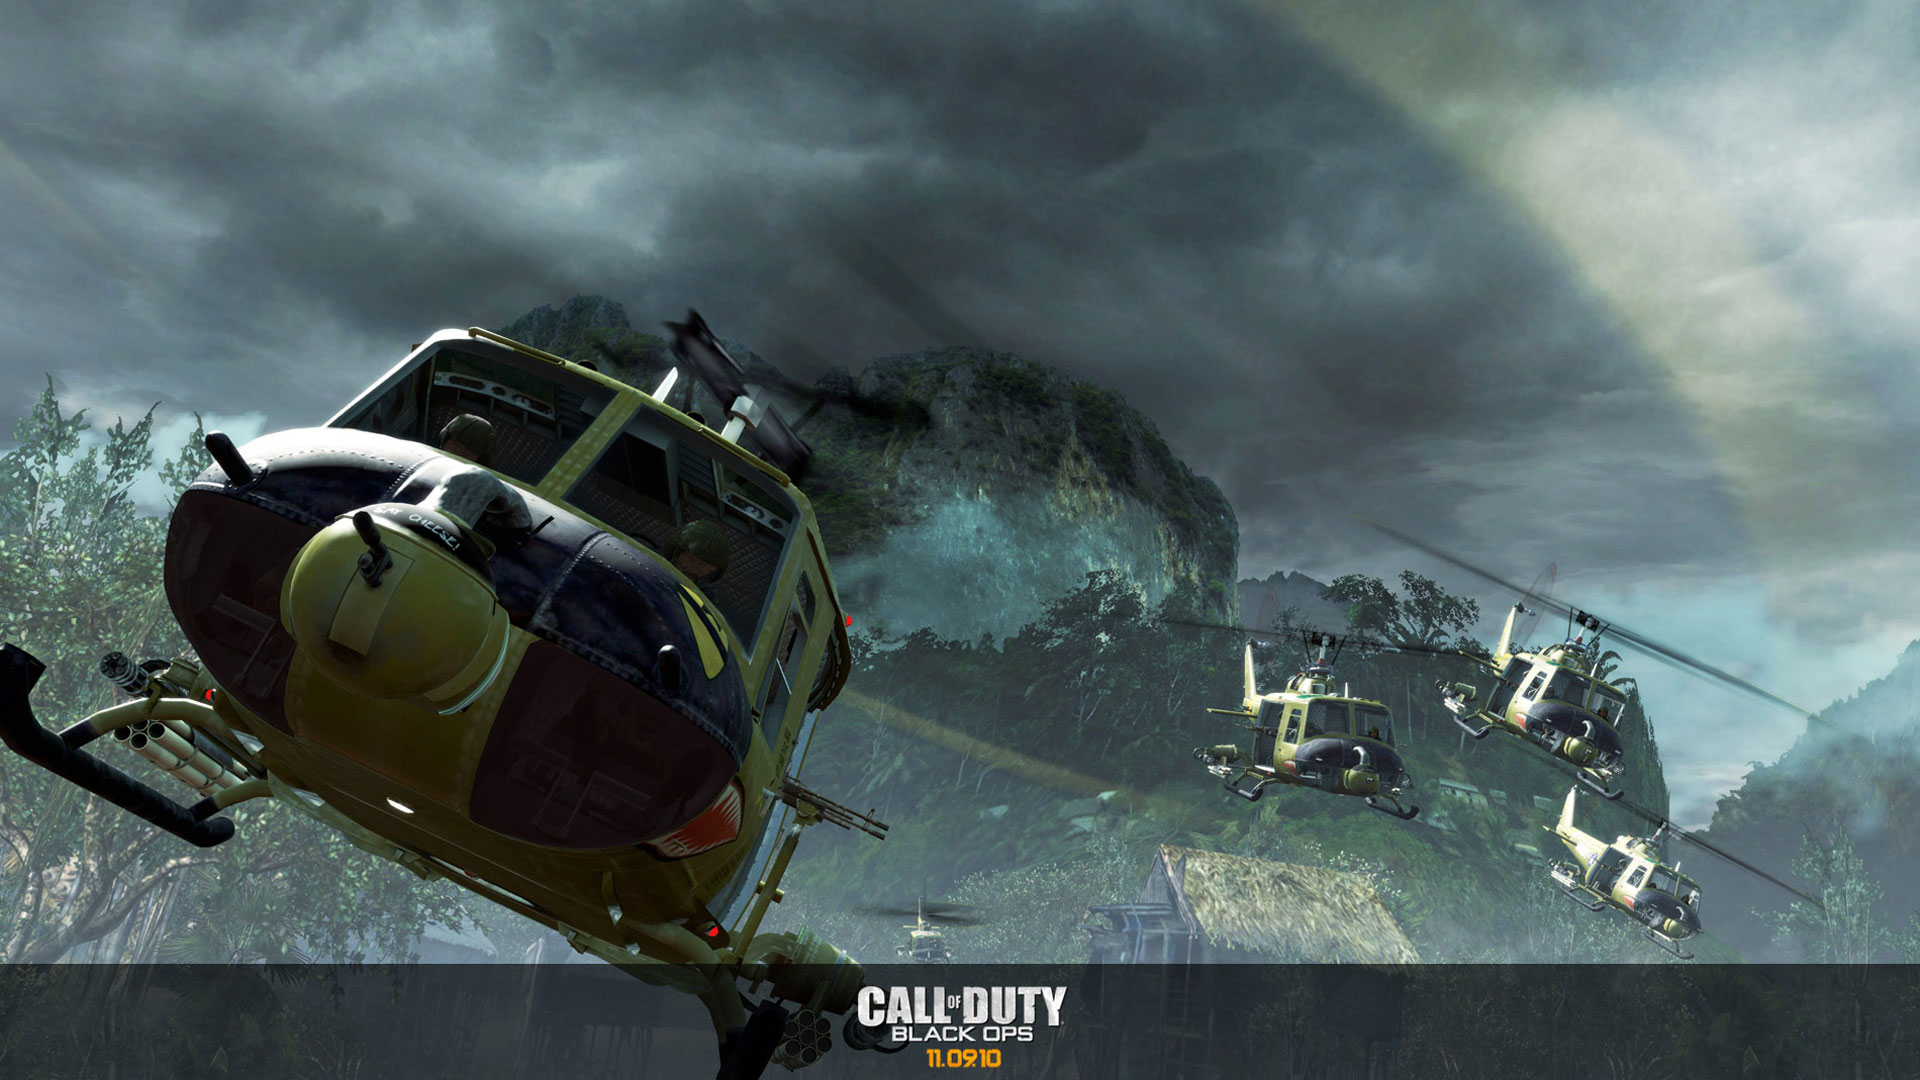 Call Of Duty Black Ops HD Wallpaper | 1920x1080 | ID:29868